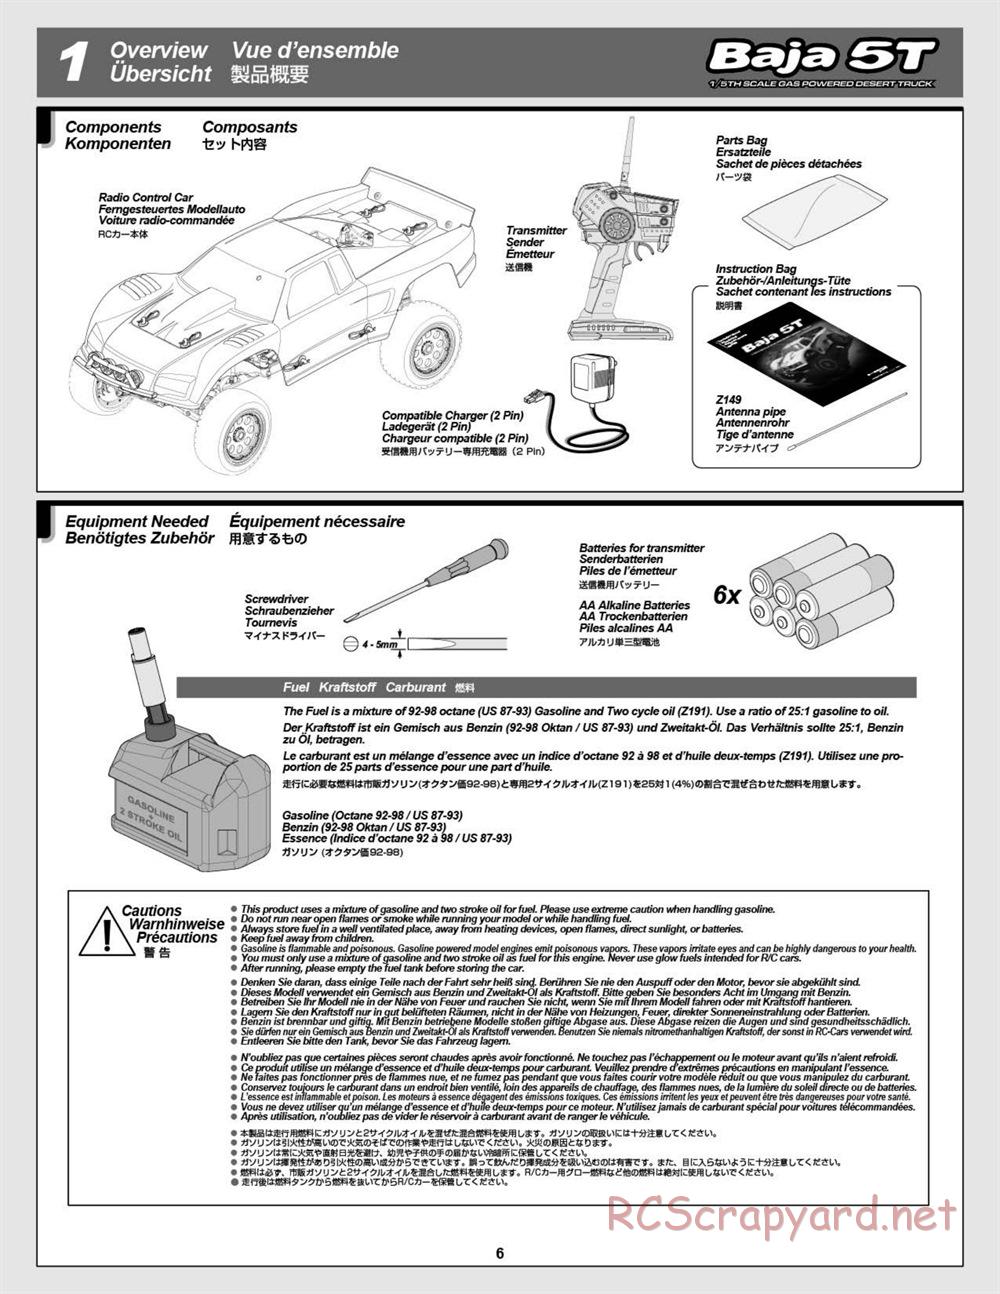 HPI - Baja 5T - Manual - Page 6